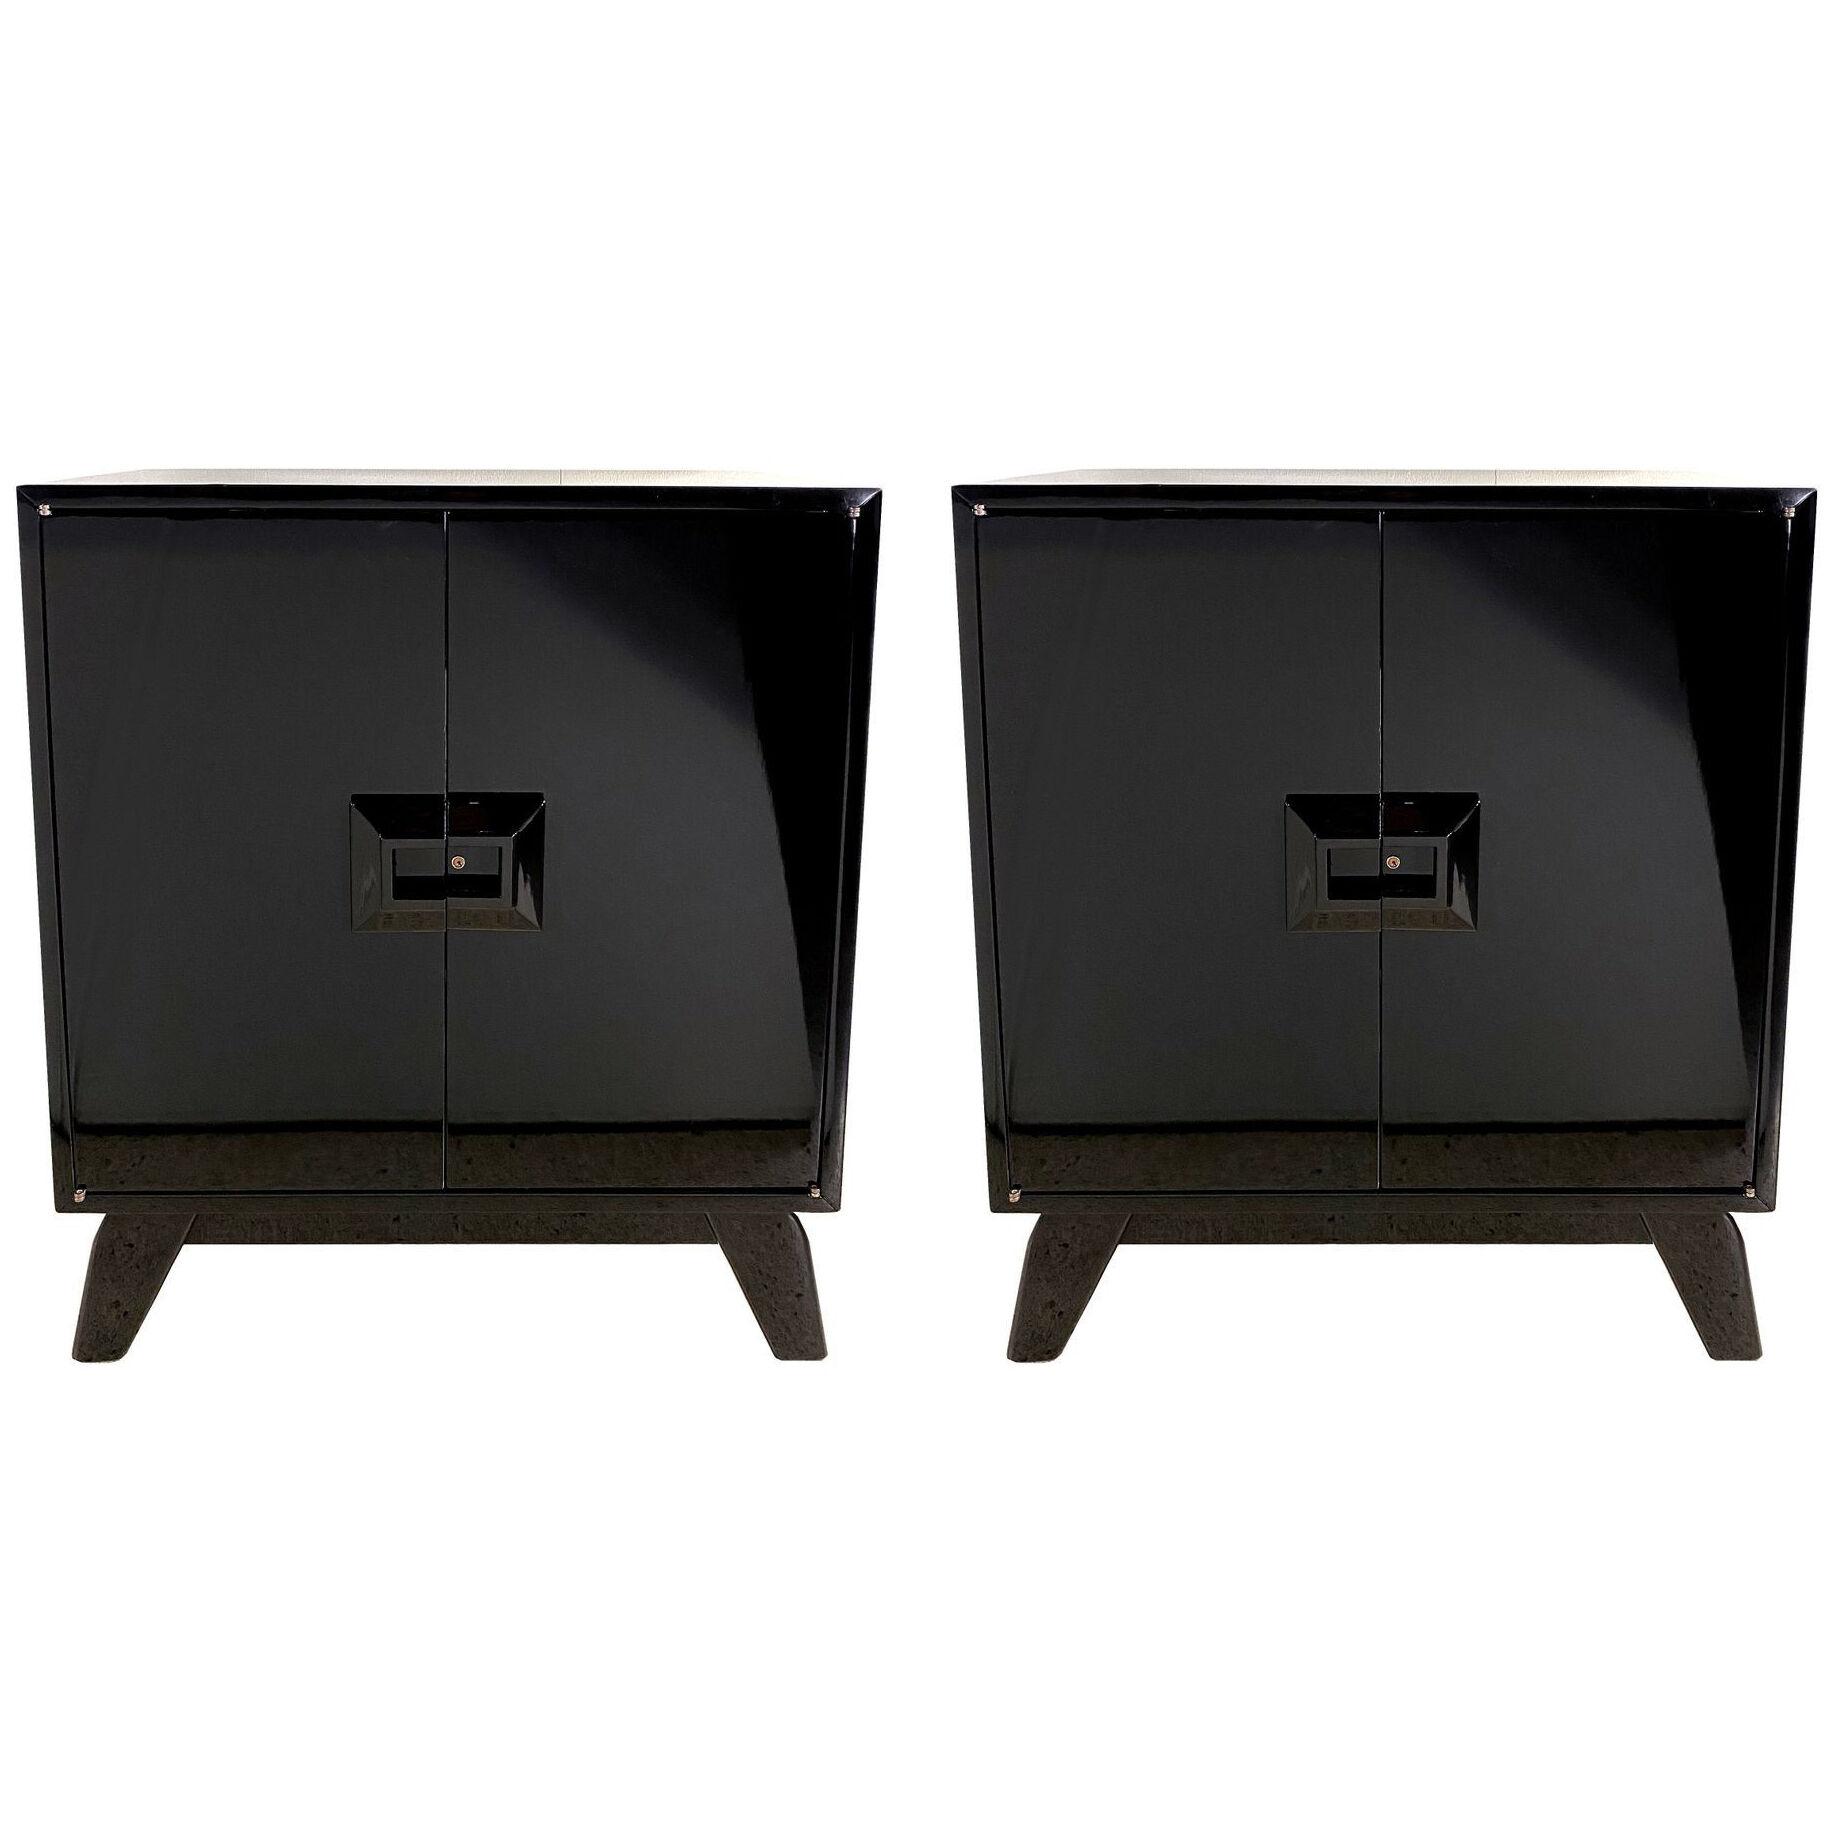 Pair of Italian Black Lacquer Modern Cabinets, Renzo Rutili